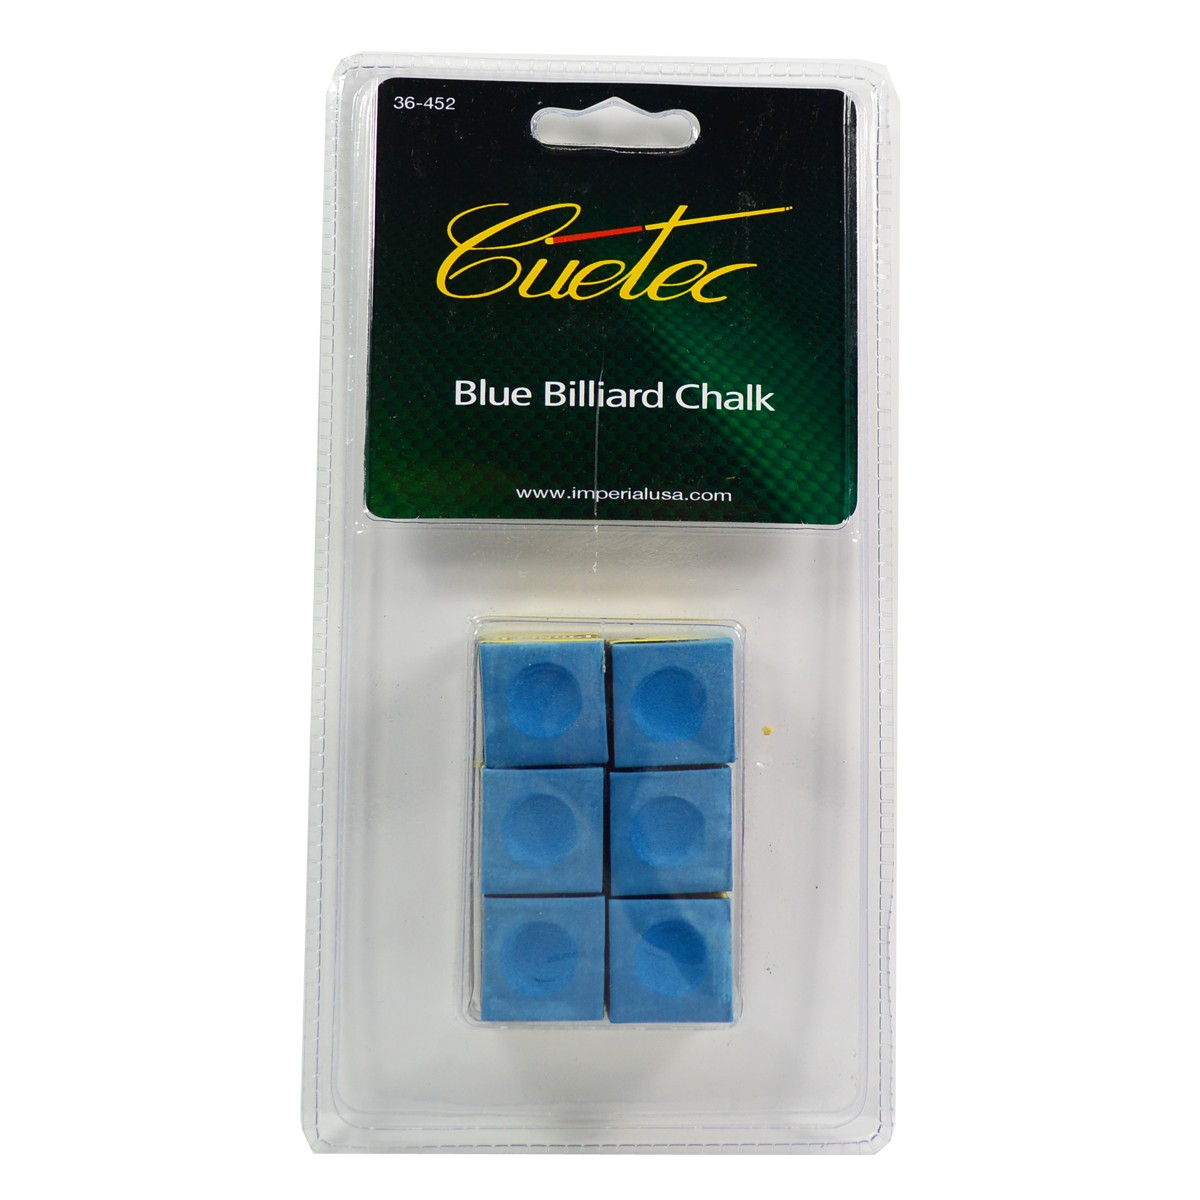 36-452 Cuetec Billiard Chalk, Blue - Pack Of 6